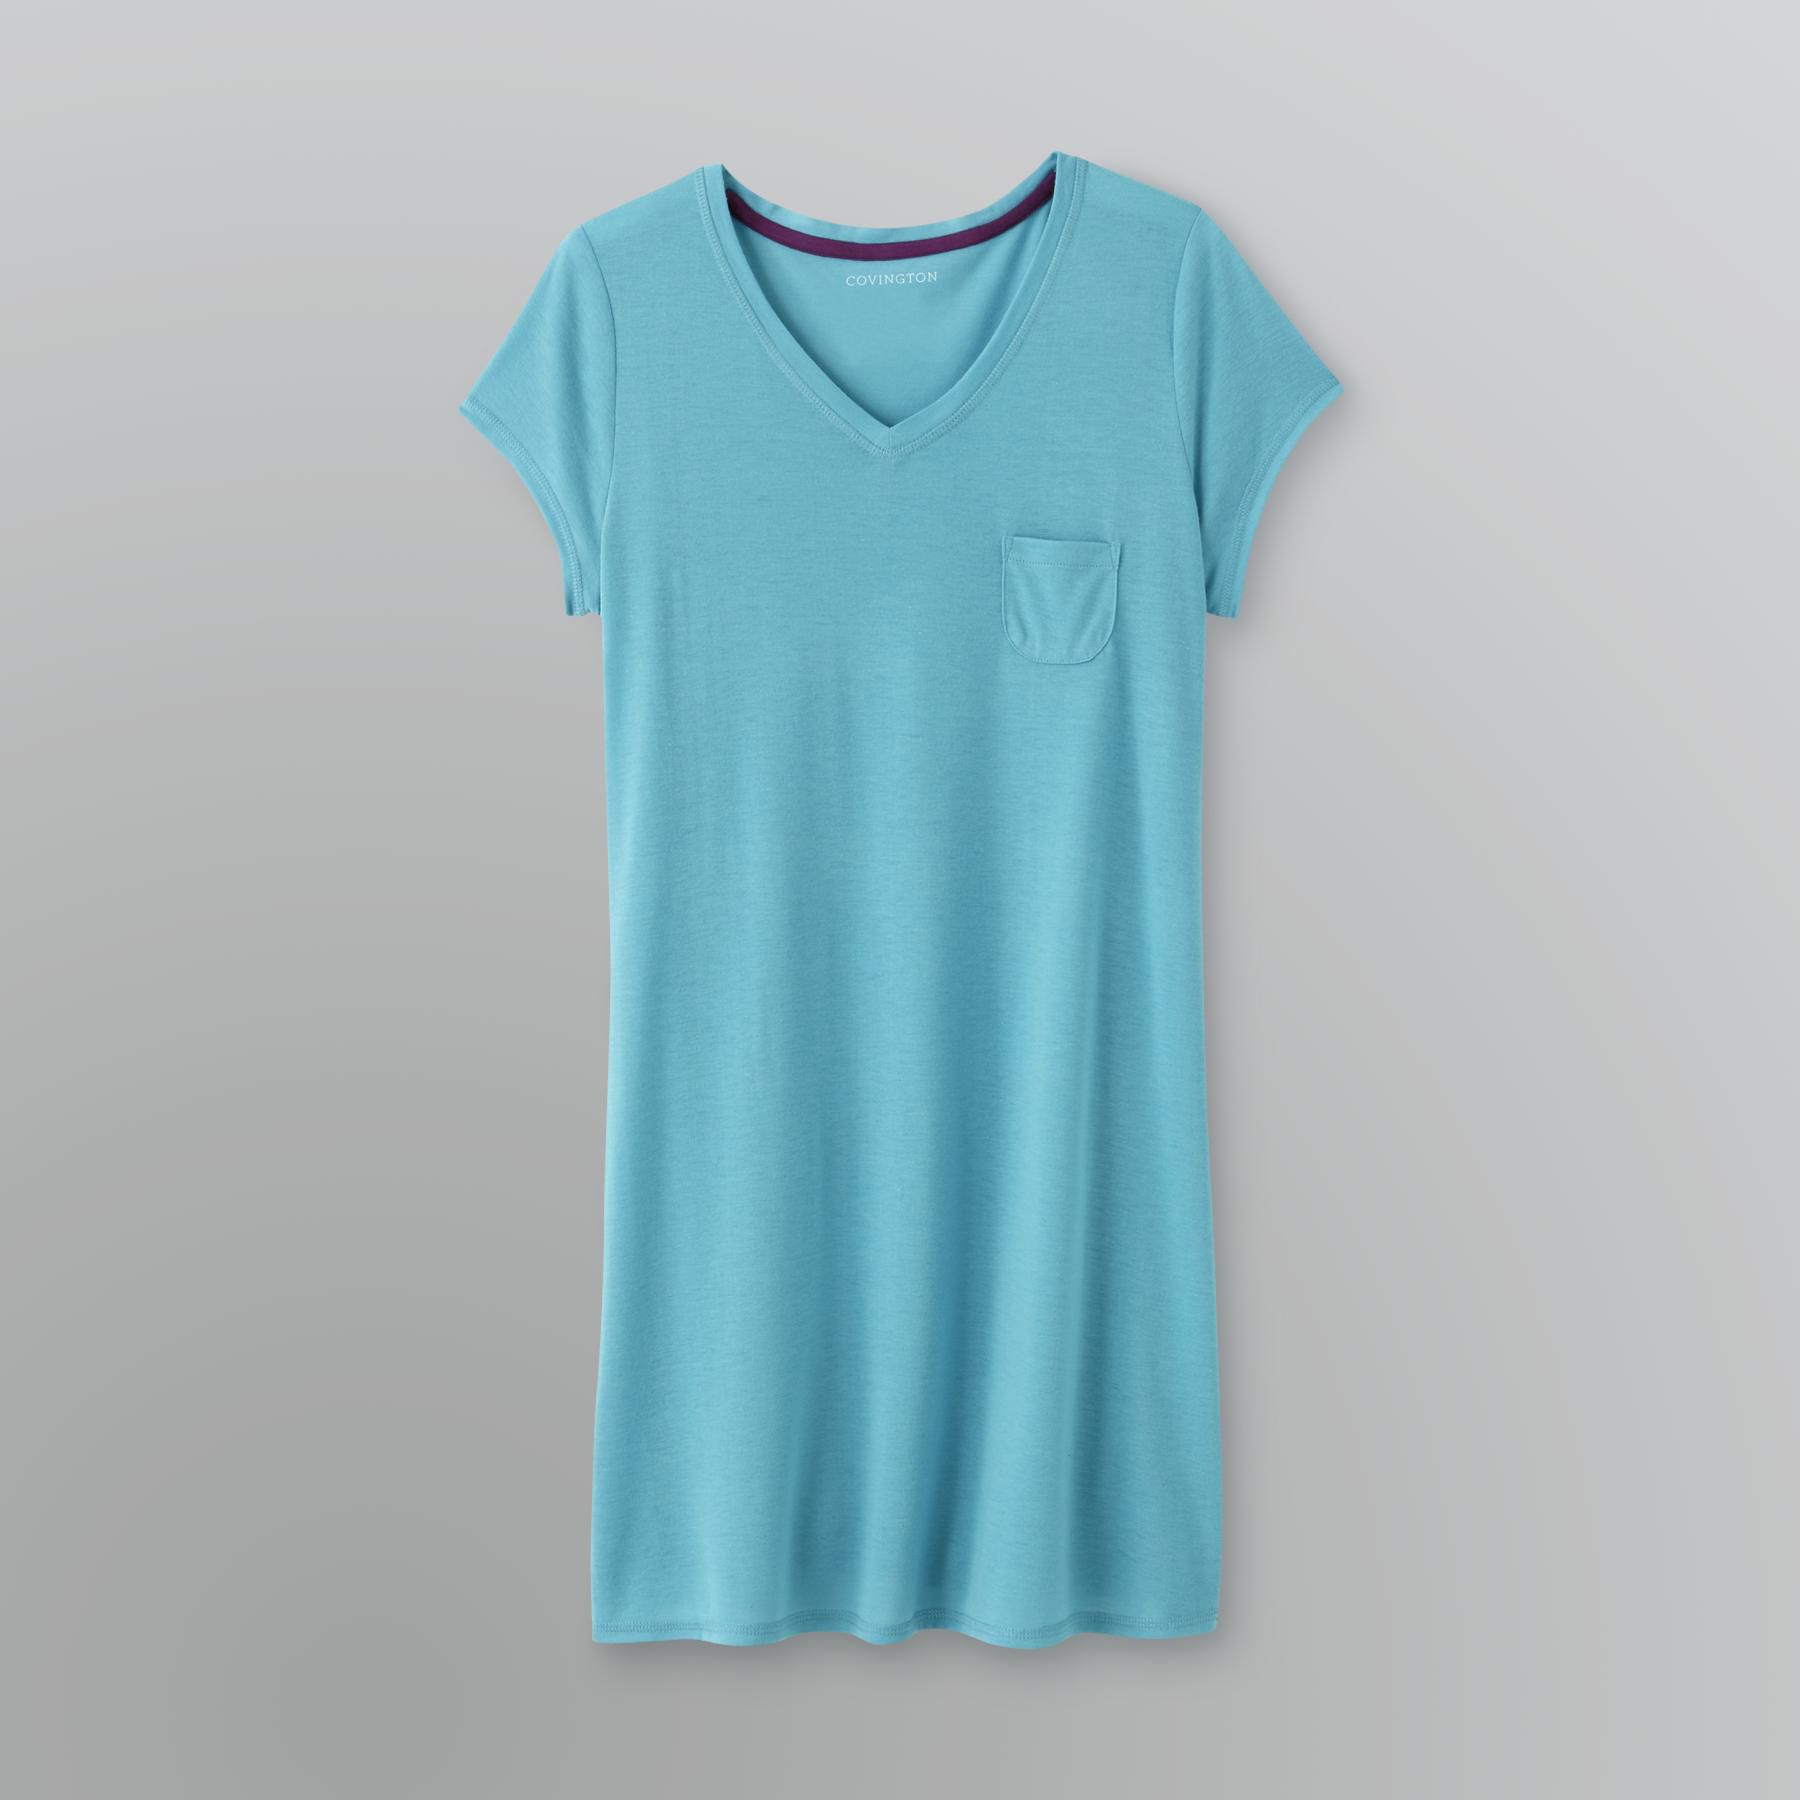 Covington Women's Sleep T-Shirt